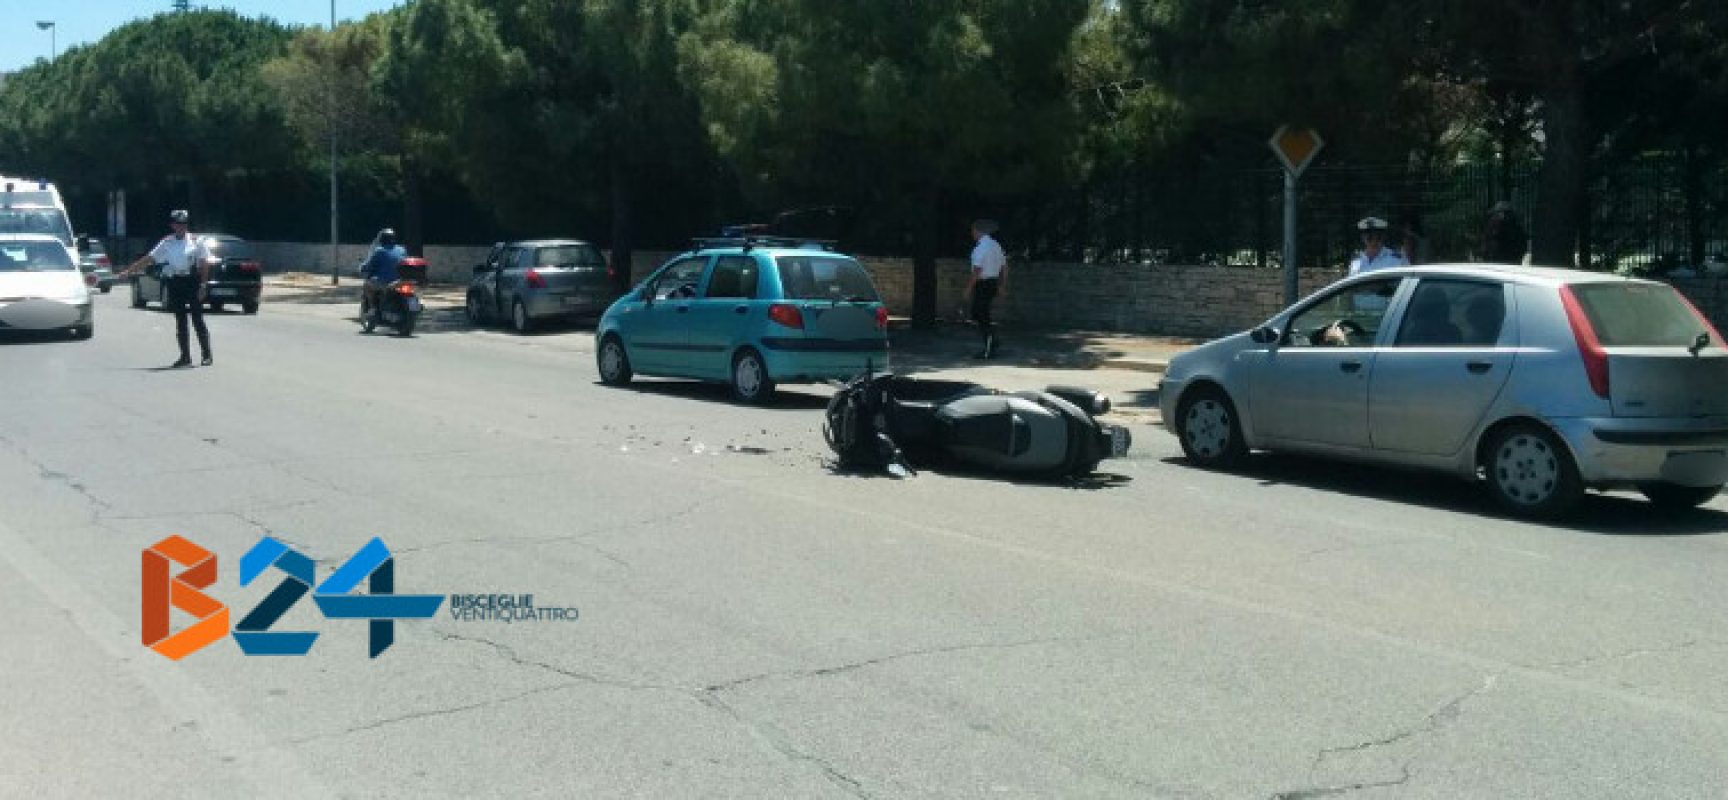 Scontro auto-moto su via Bovio, 21enne al pronto soccorso